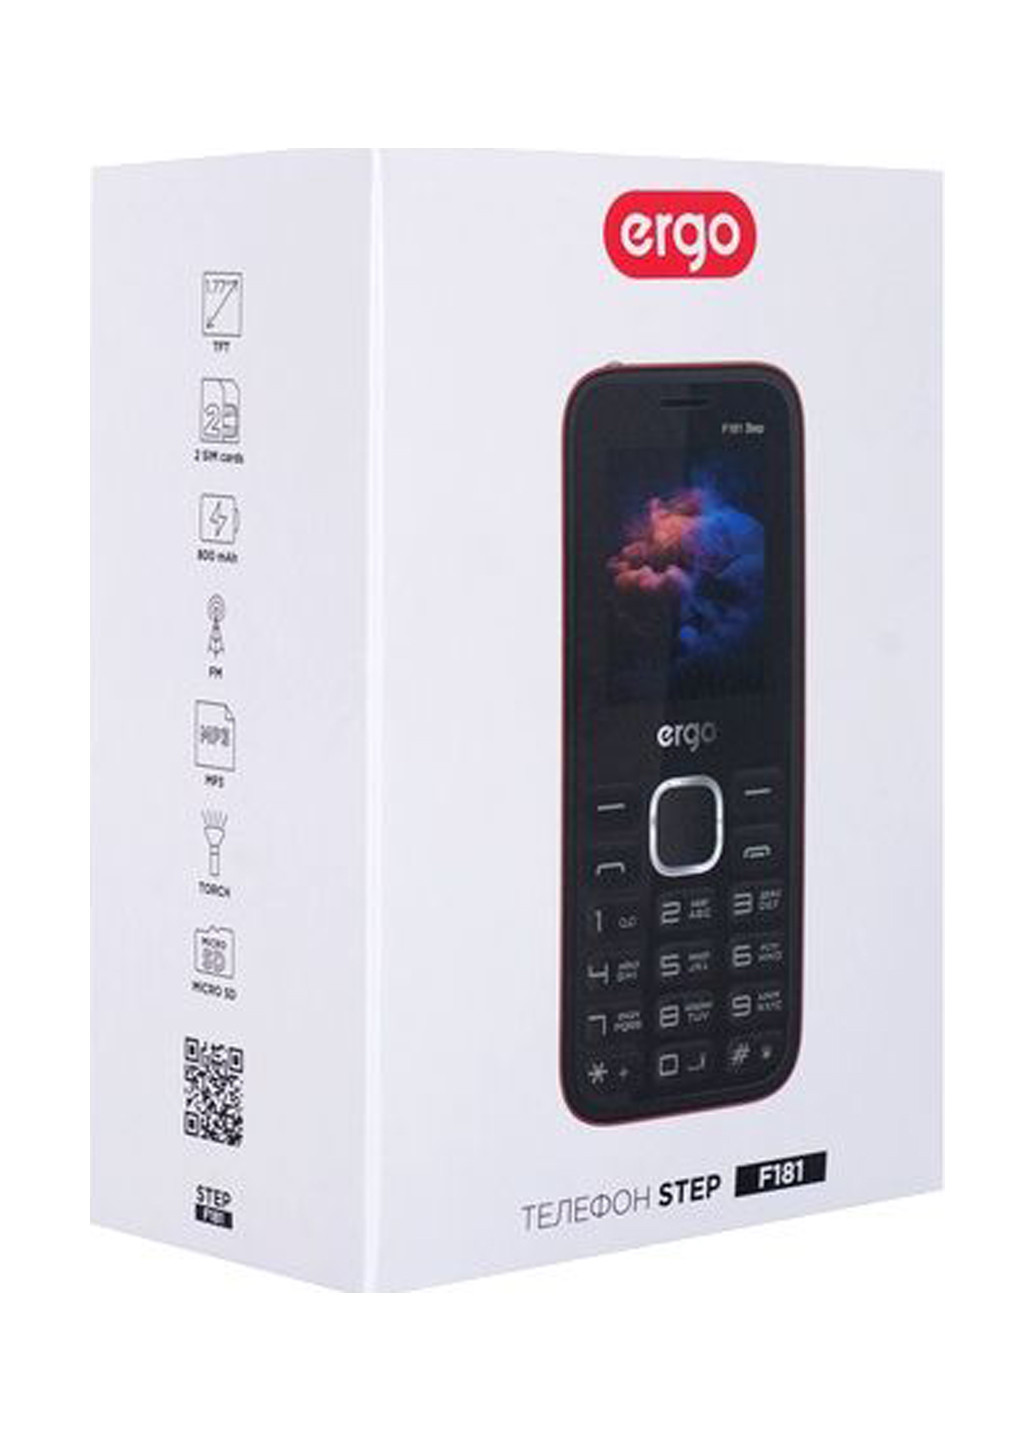 Мобільний телефон Ergo f181 step red (132999697)